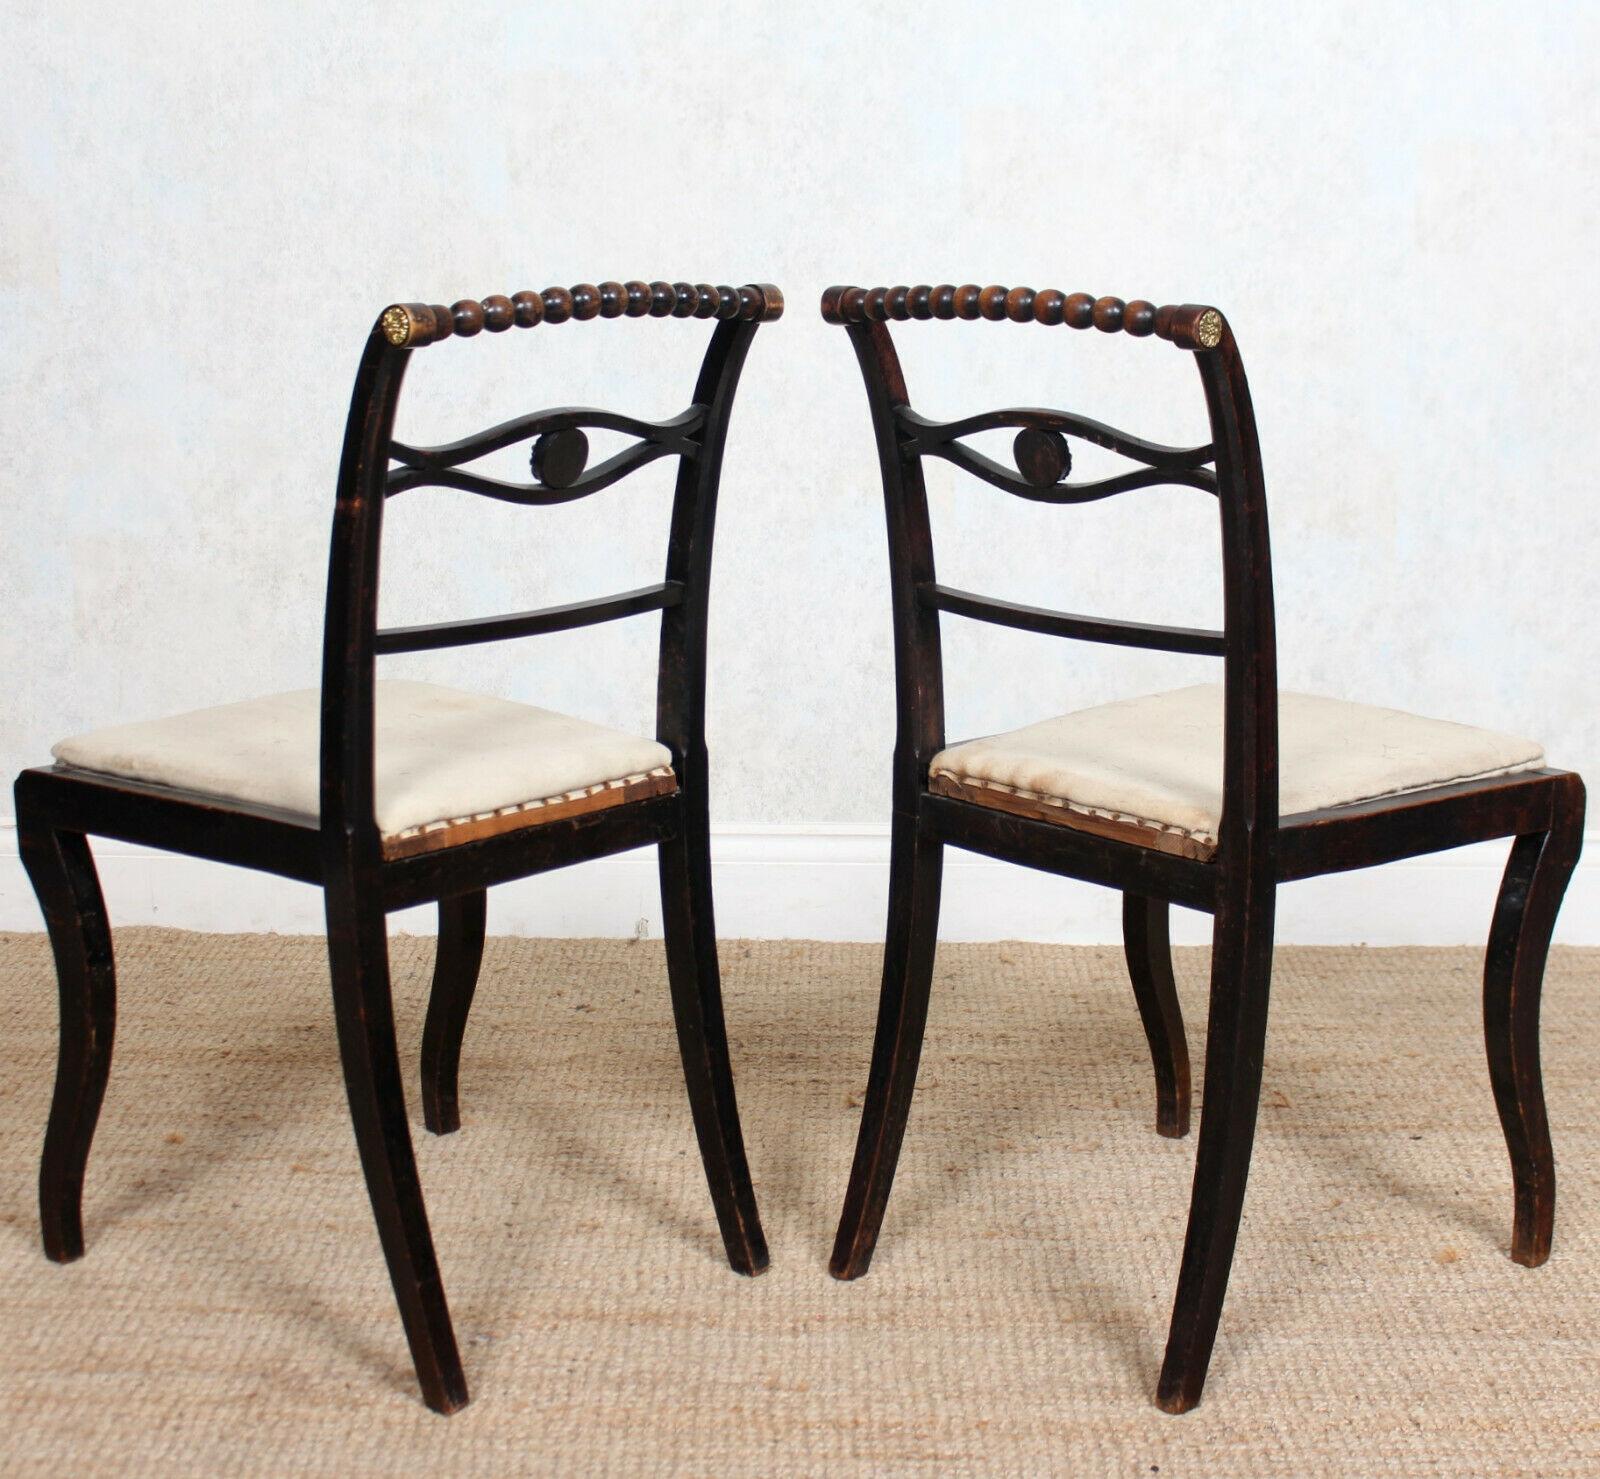 4 Regency Ebonised Dining Chairs Trafalgar, 19th Century For Sale 1